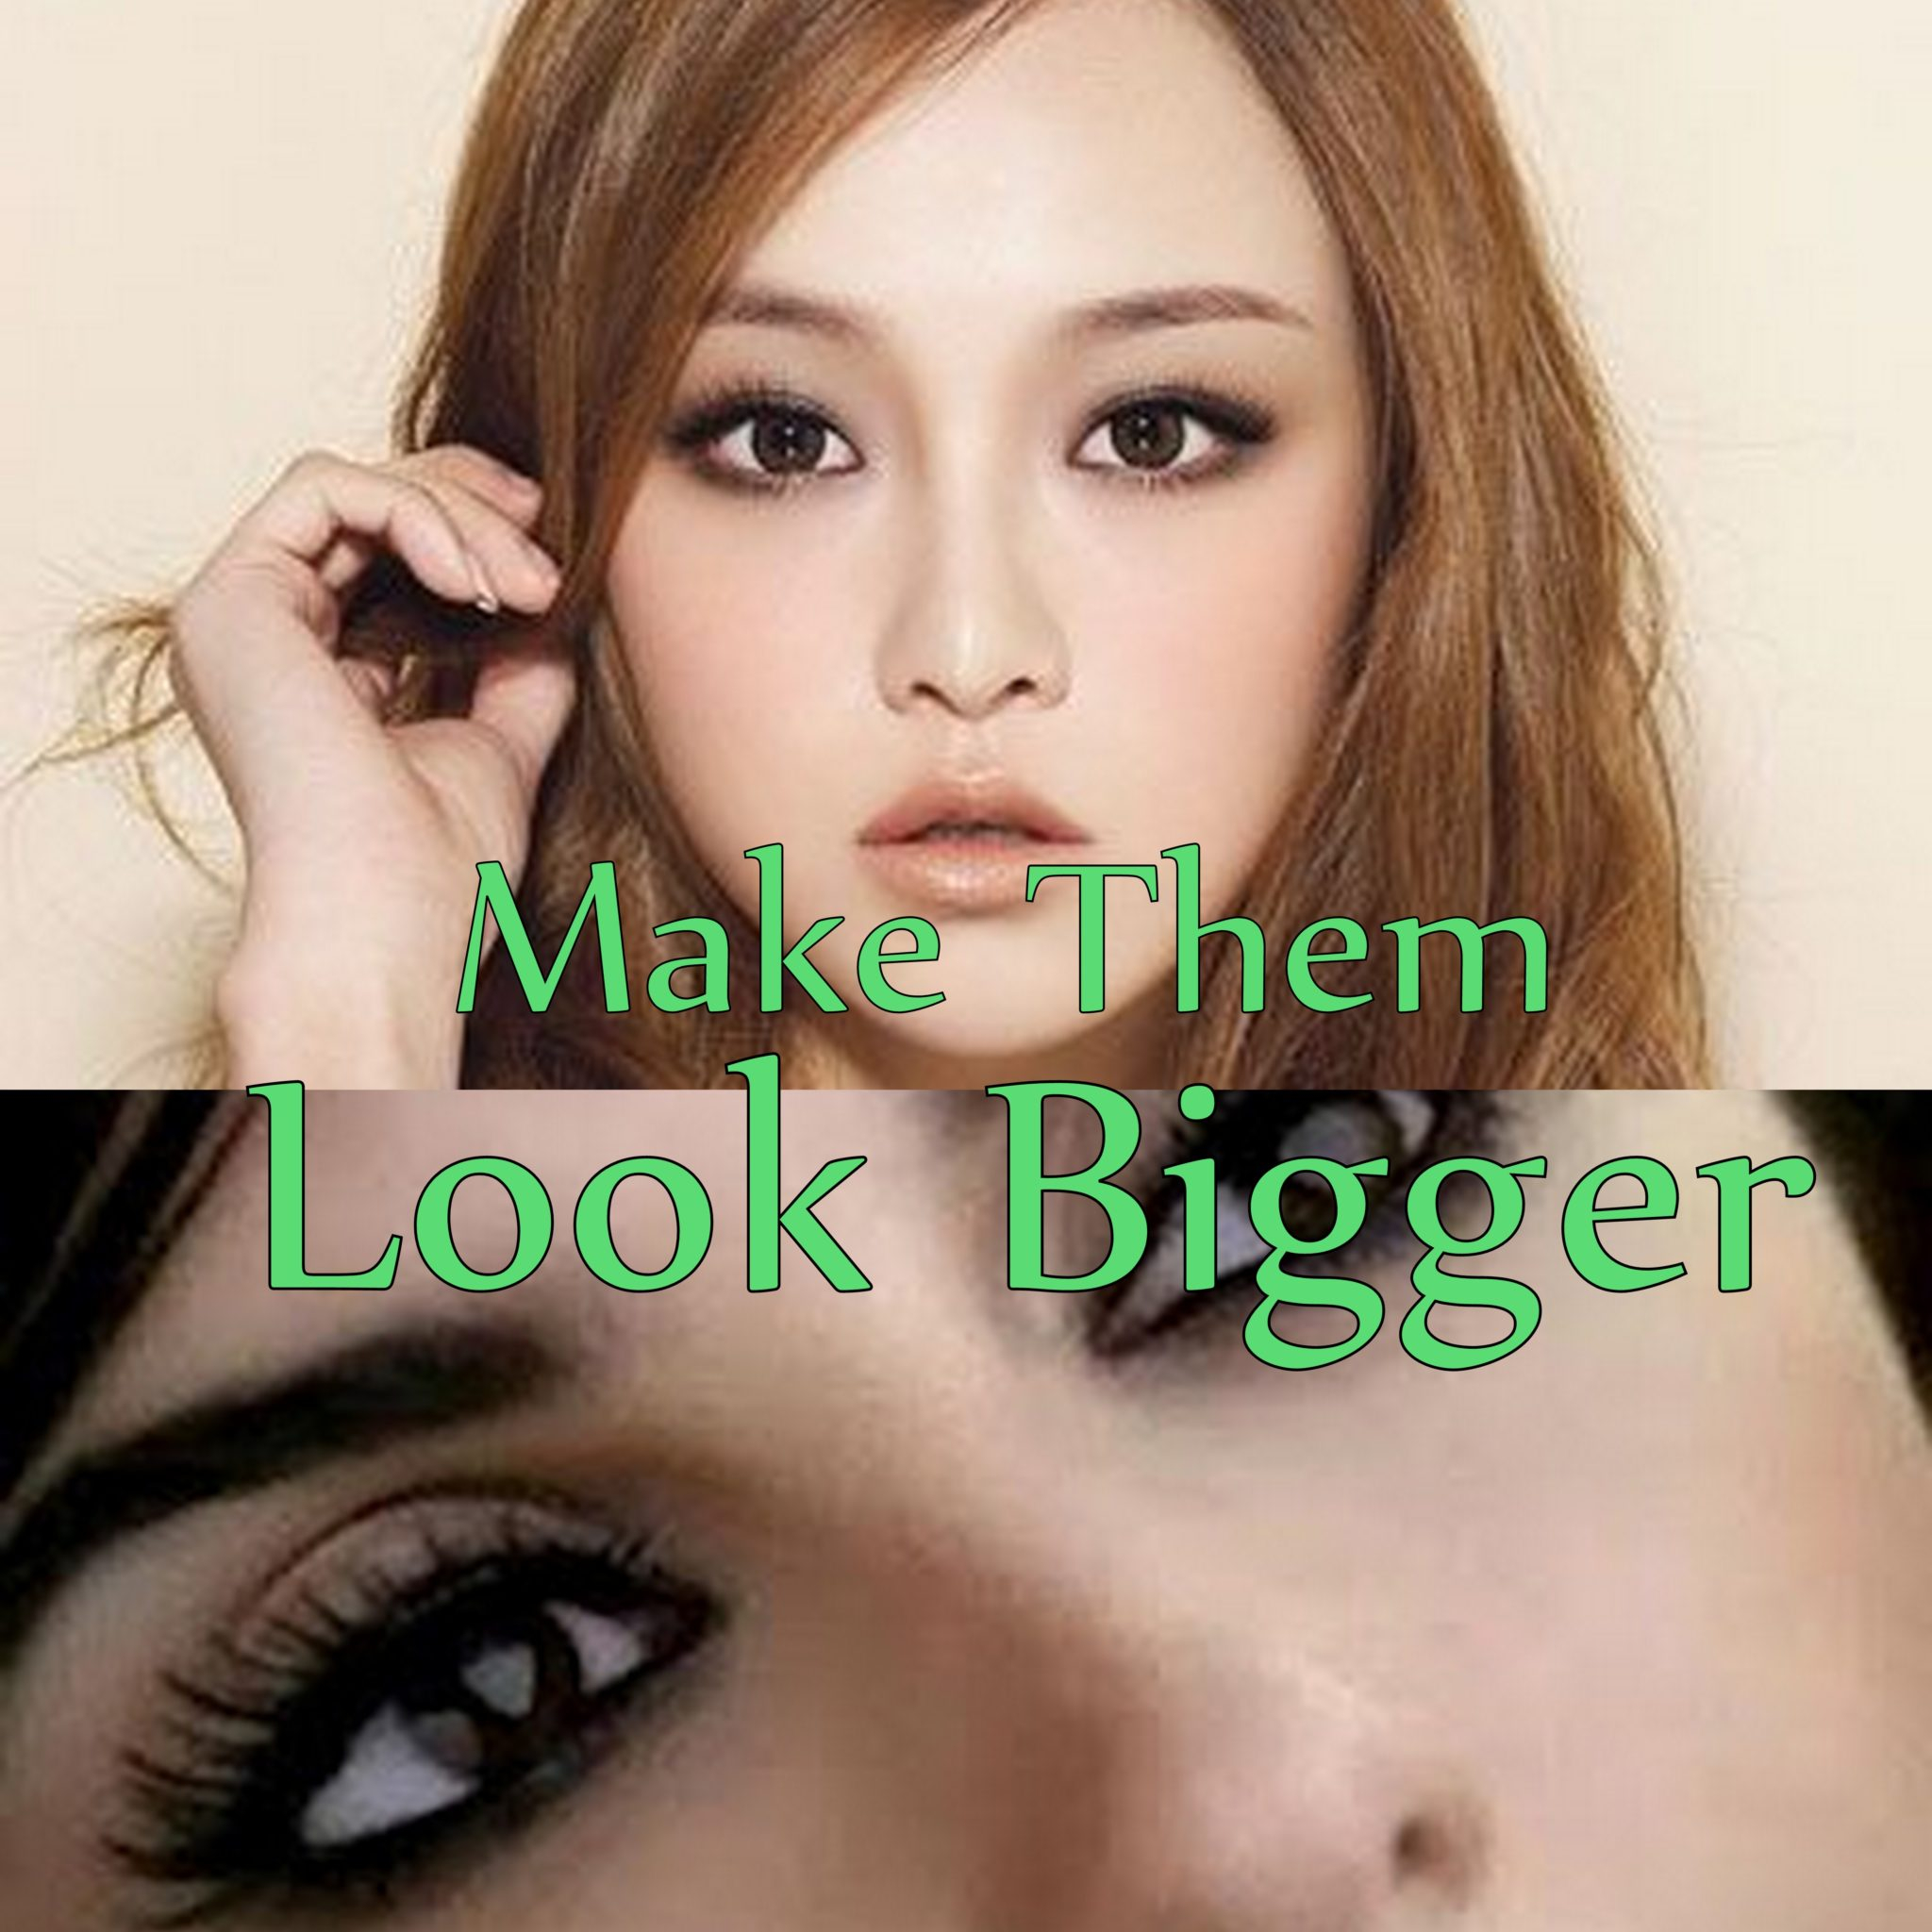 Eye Makeup To Make Small Eyes Look Bigger Eye Makeup For Small Eyes Make Them Look Bigger